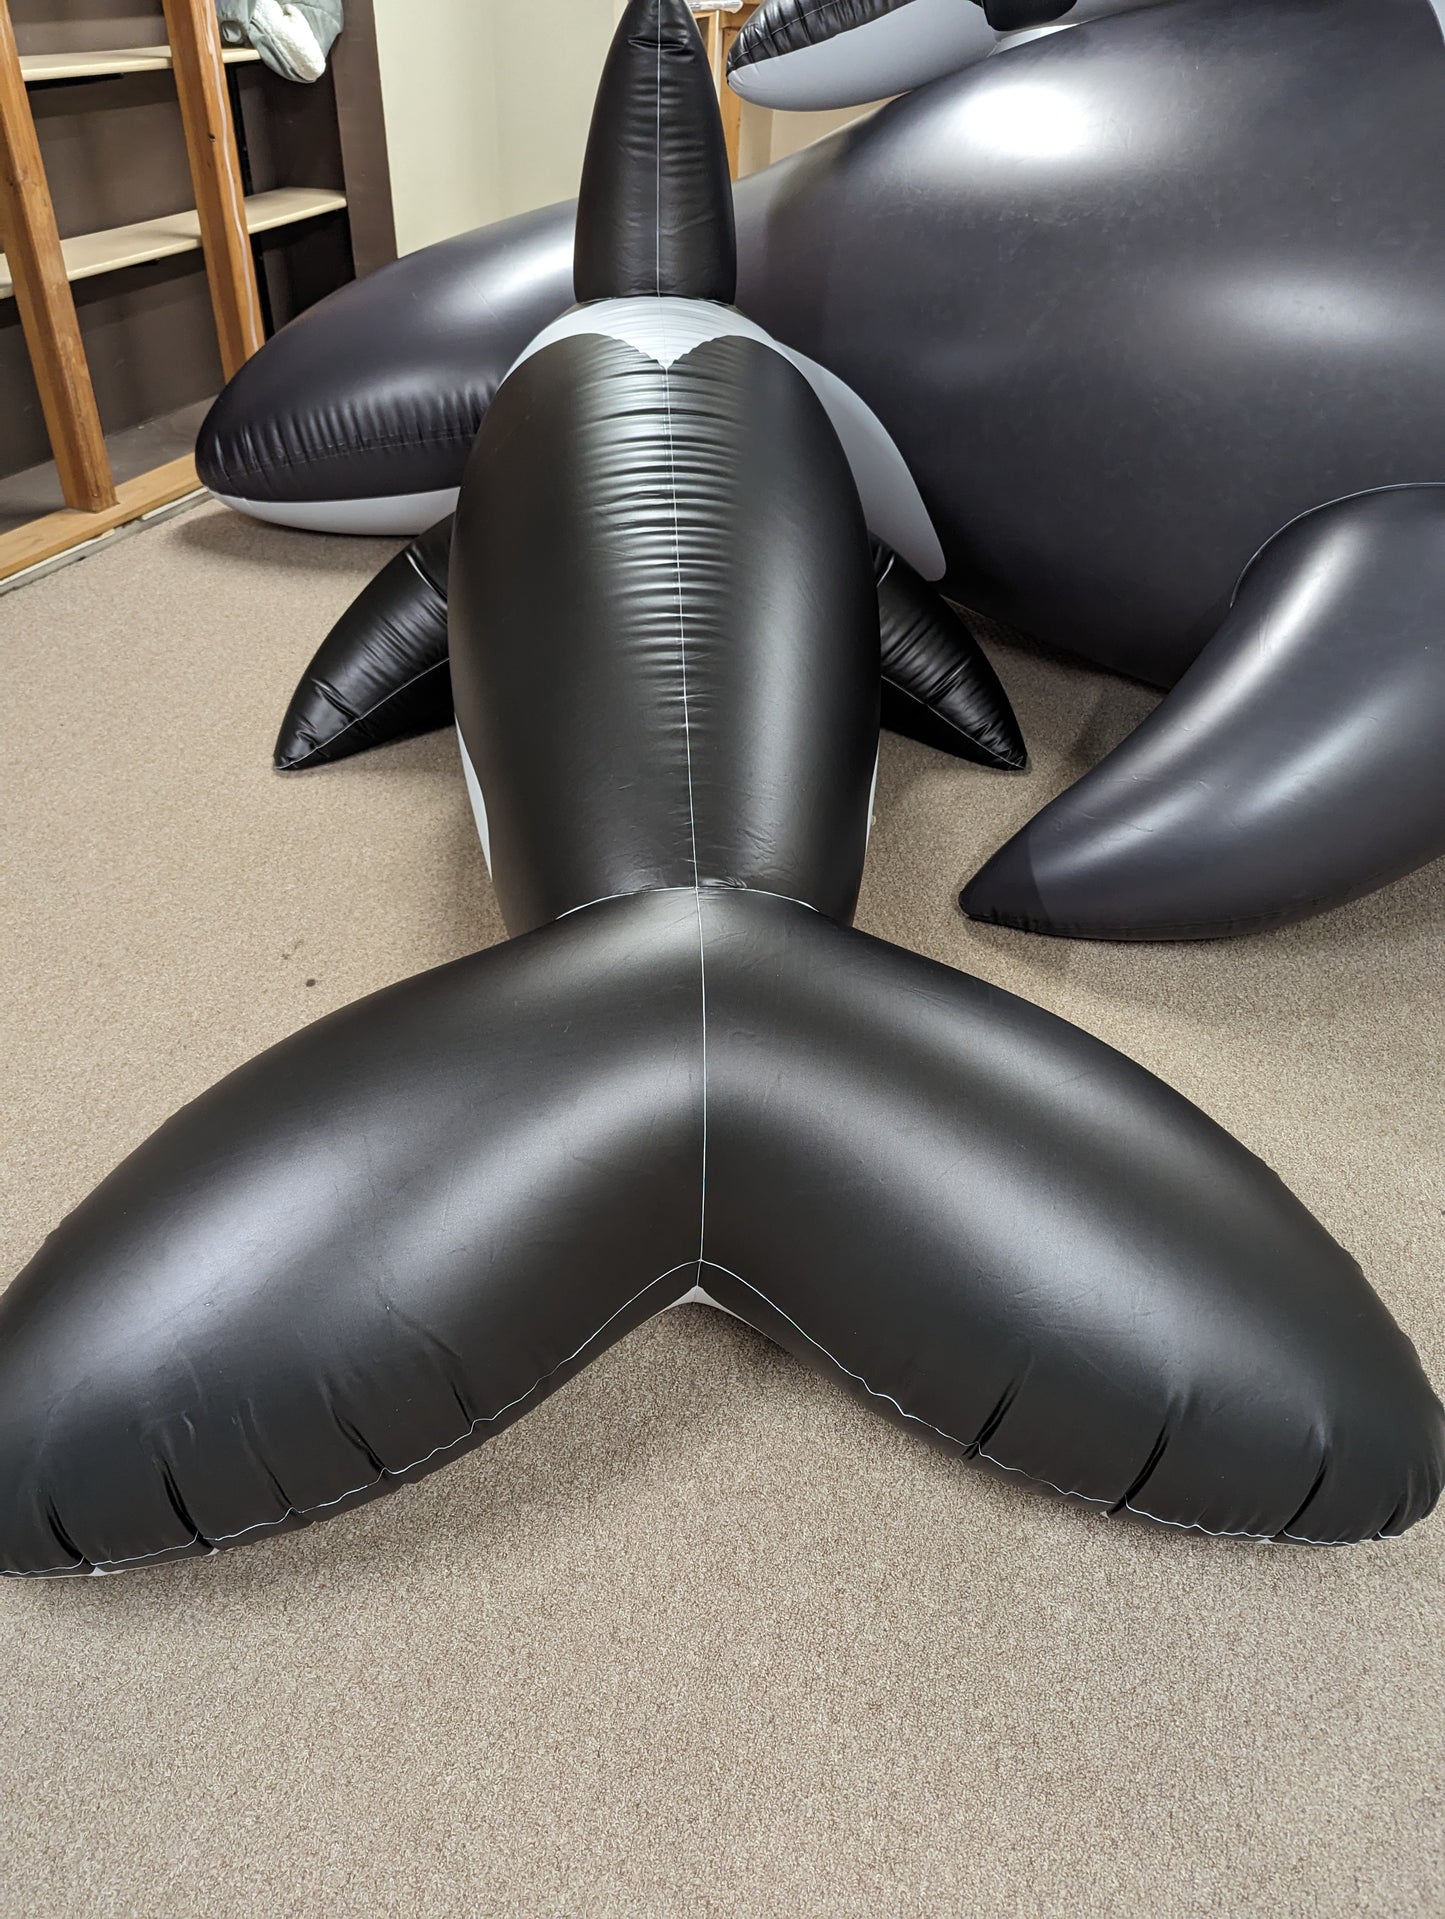 PhenodToy Whale (2.5M Size)